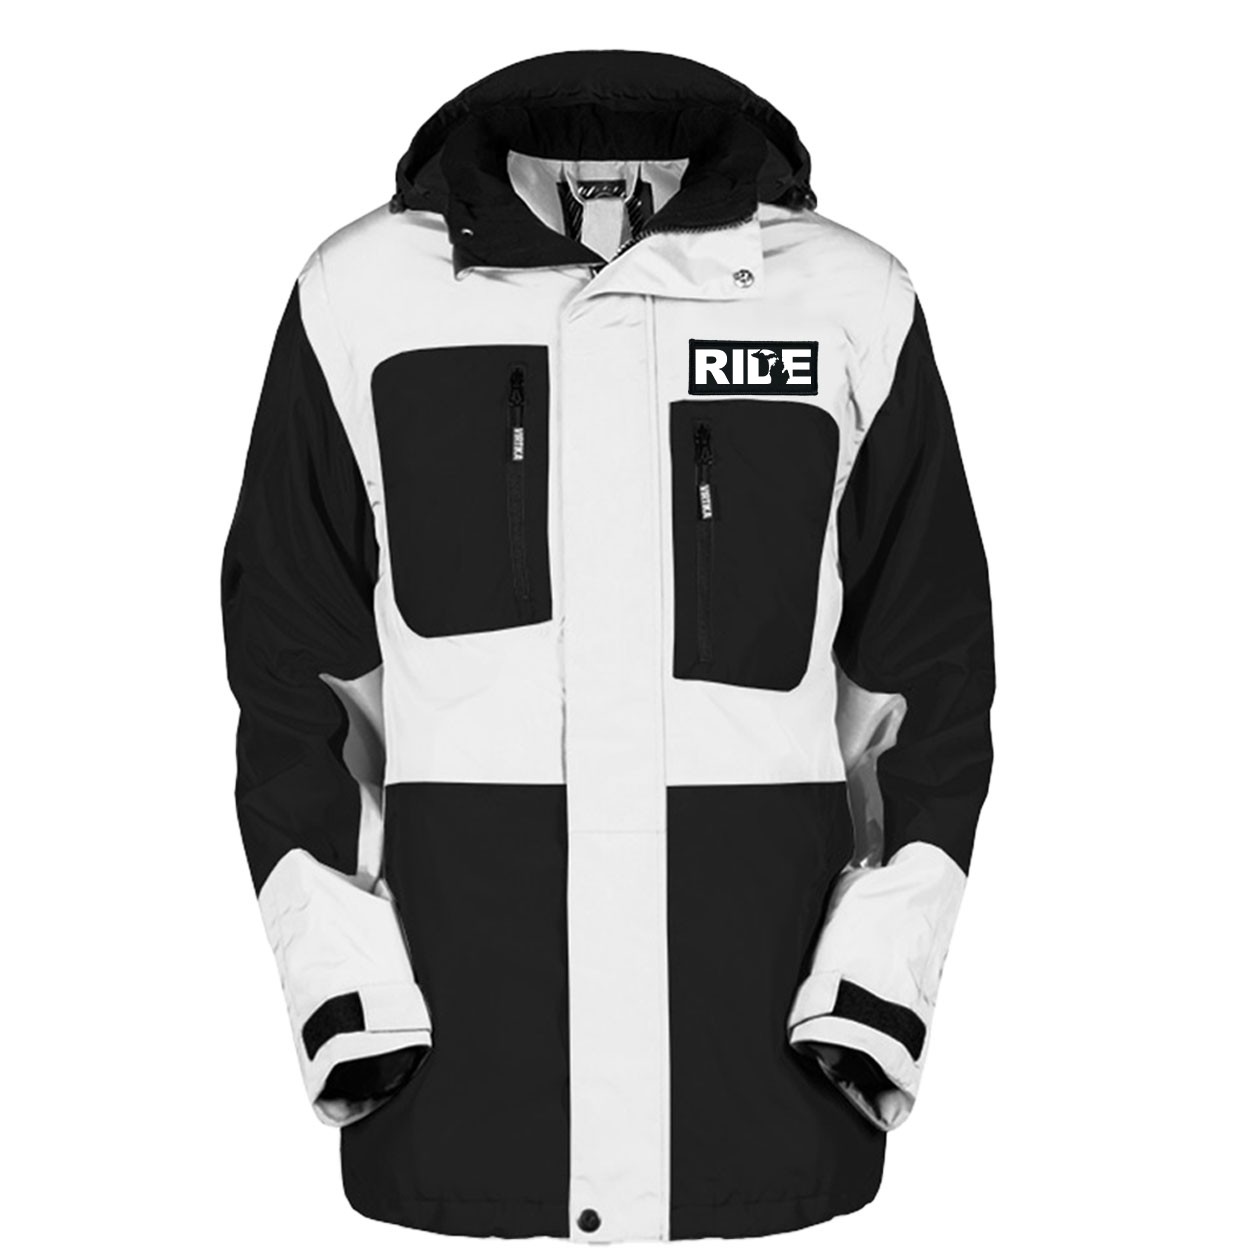 Ride Michigan Classic Woven Patch Pro Snowboard Jacket (Black/White)